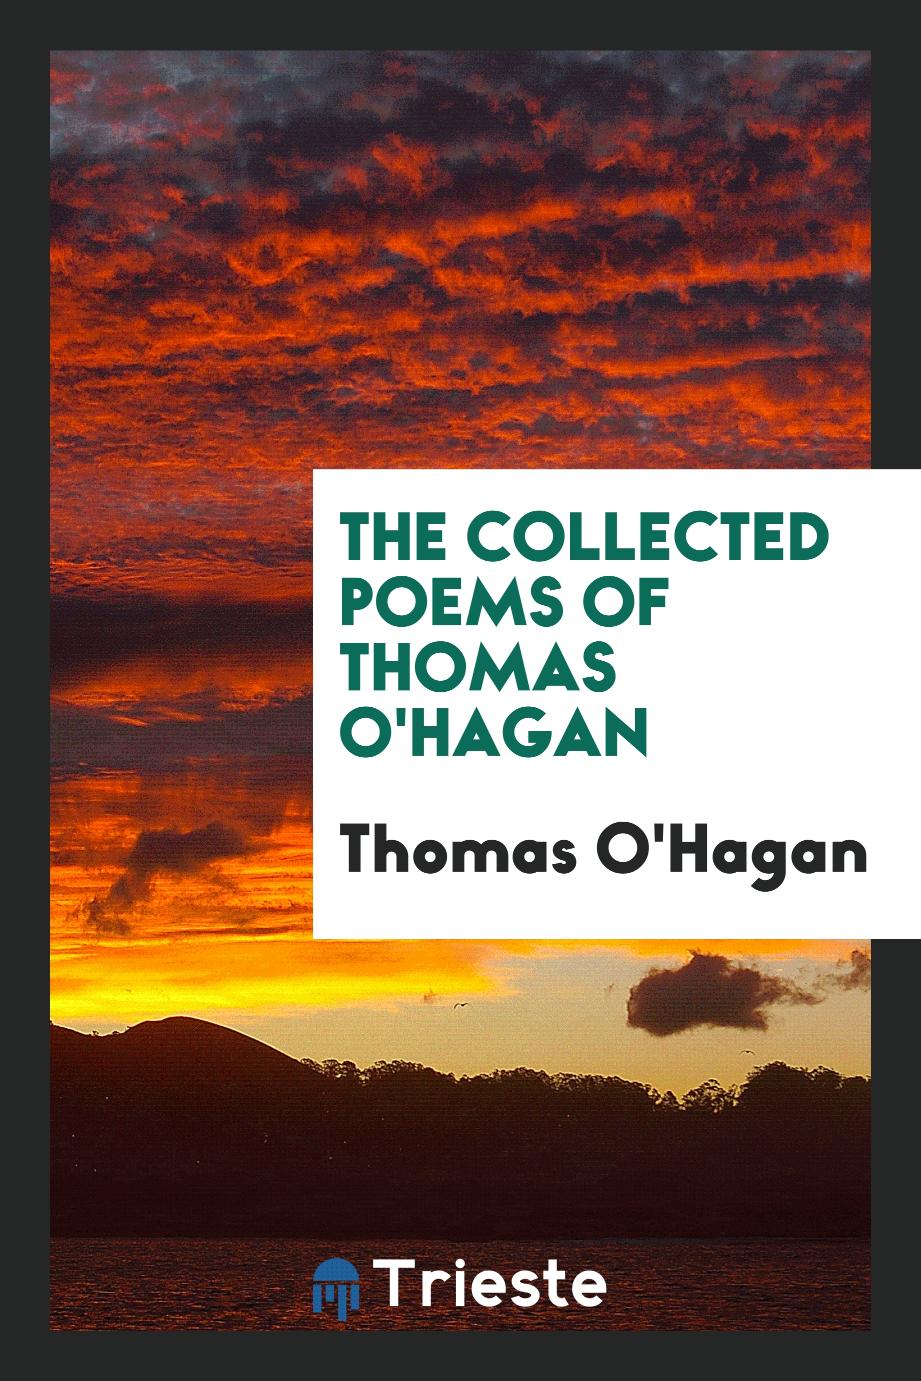 The collected poems of Thomas O'Hagan